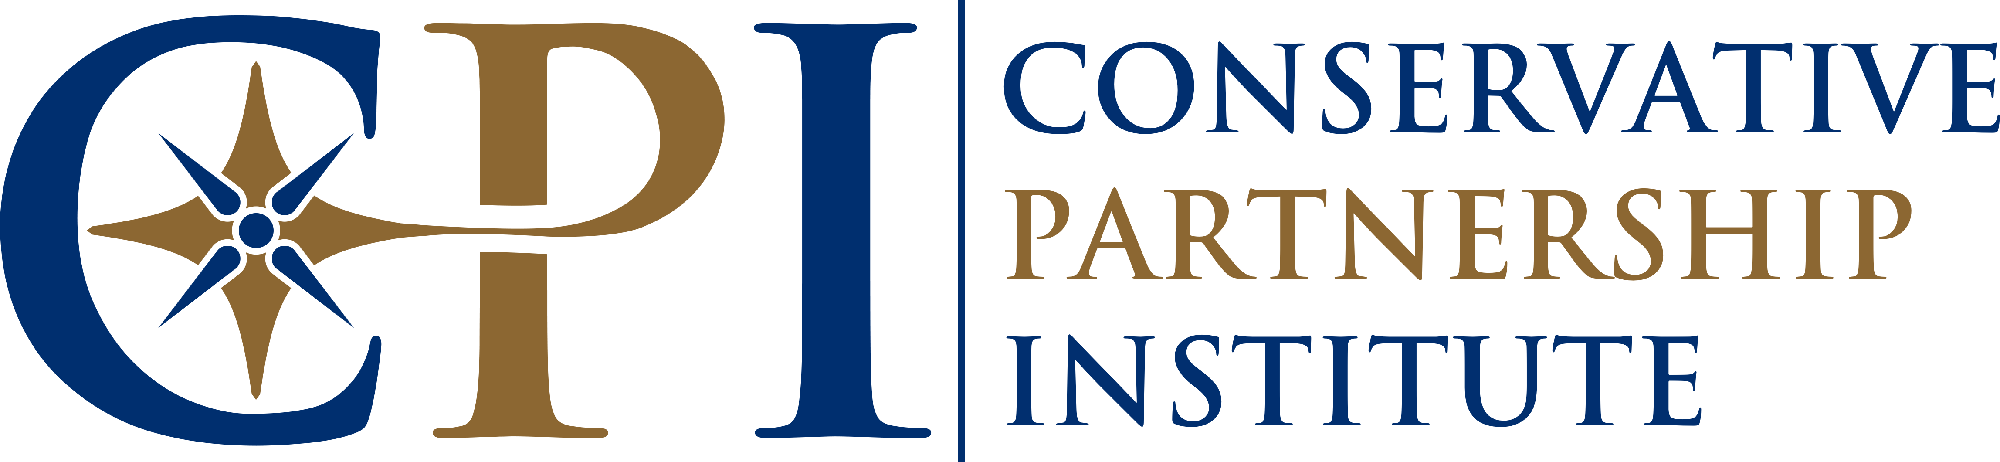 conservative_partnership_institute-logo.png